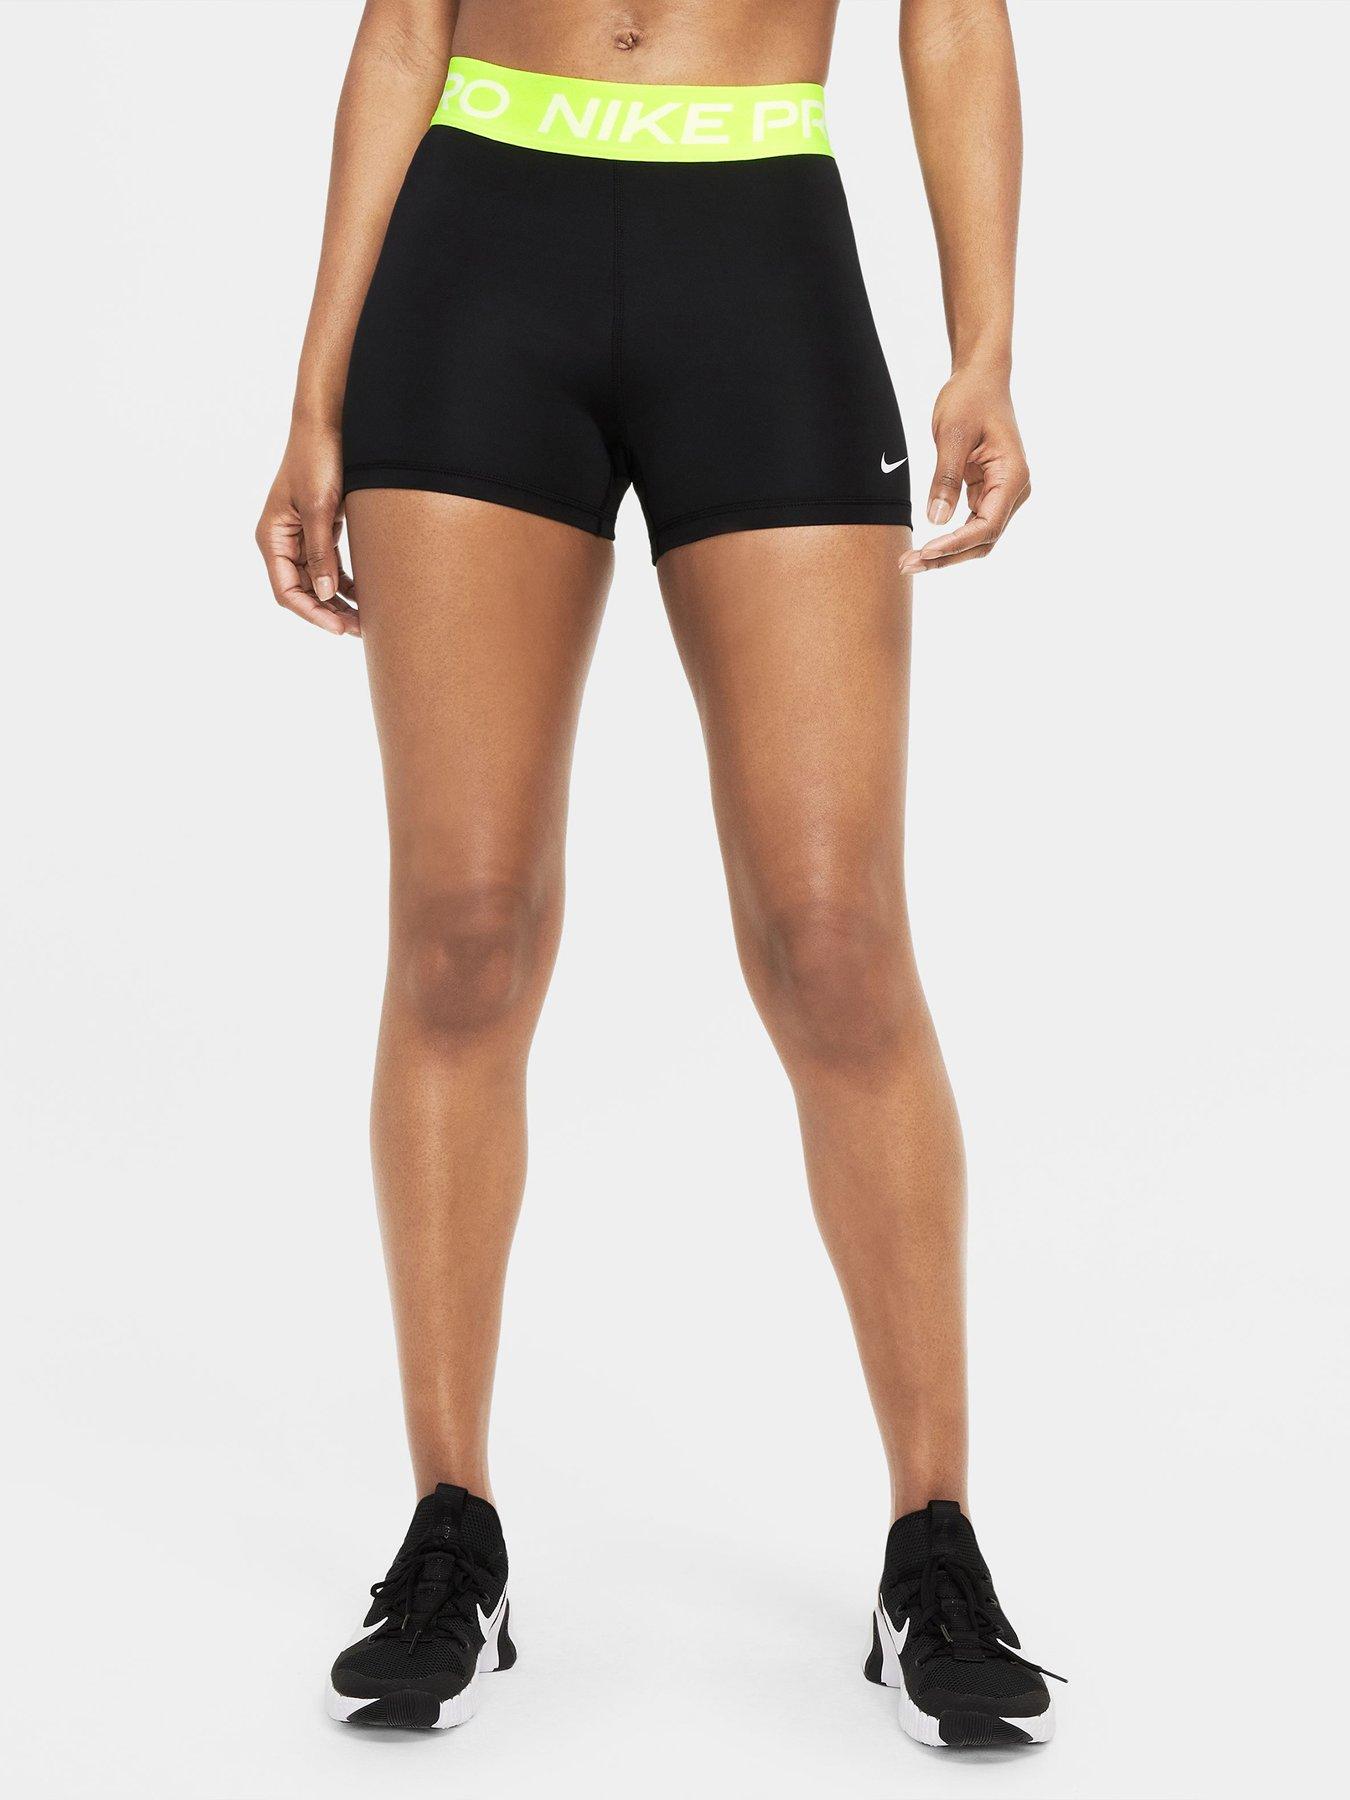 Nike Short Pants(women), Women's Fashion, Bottoms, Shorts on Carousell